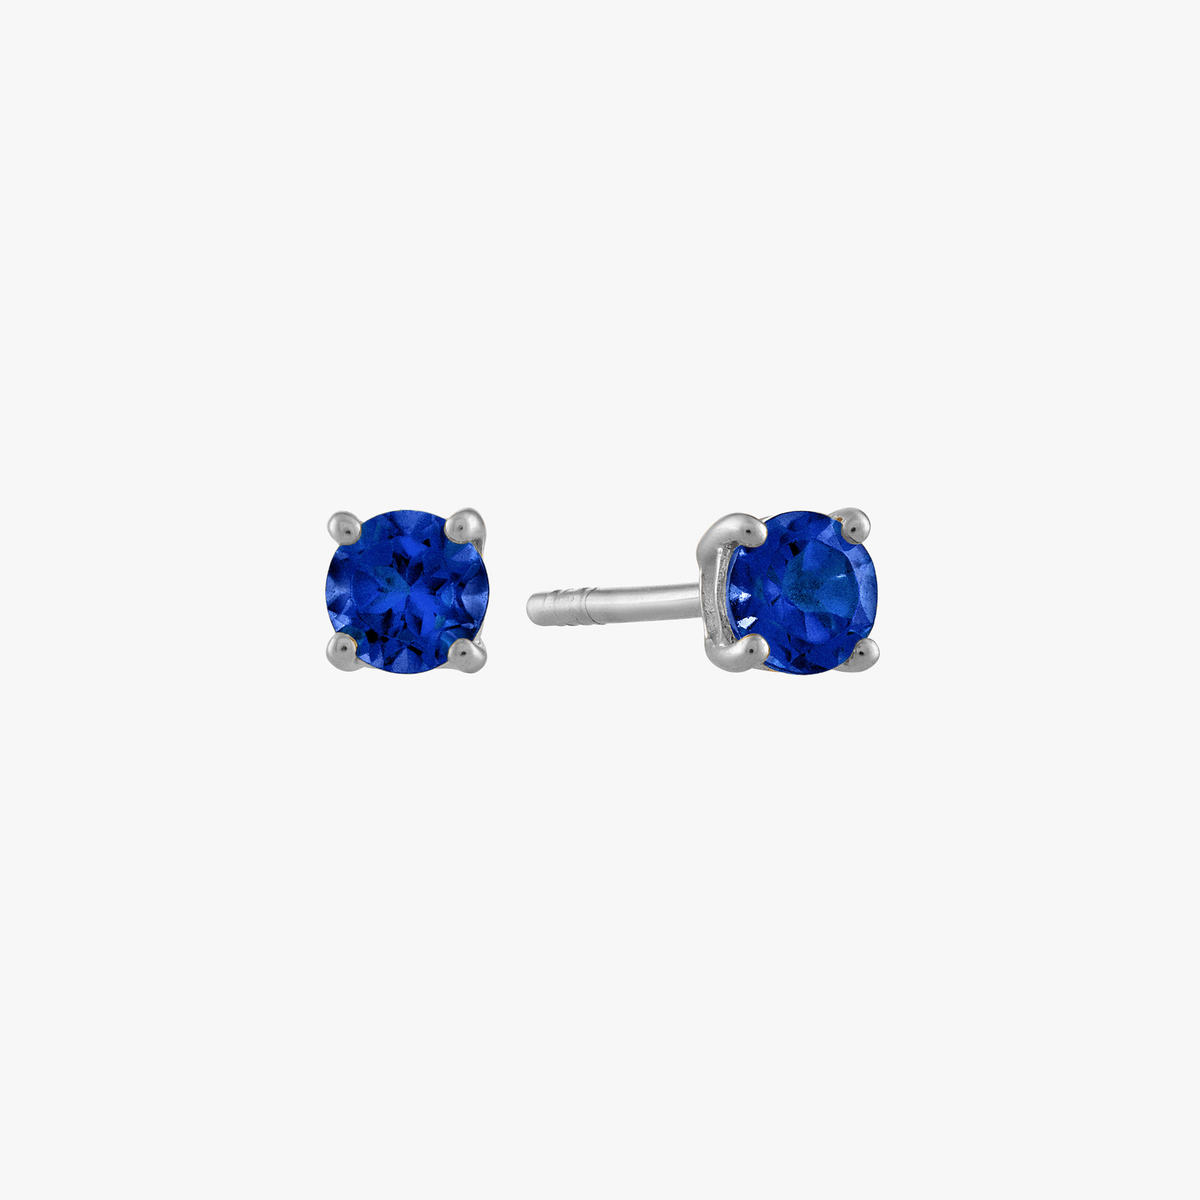 Sapphire stud earring pair silver hardware 